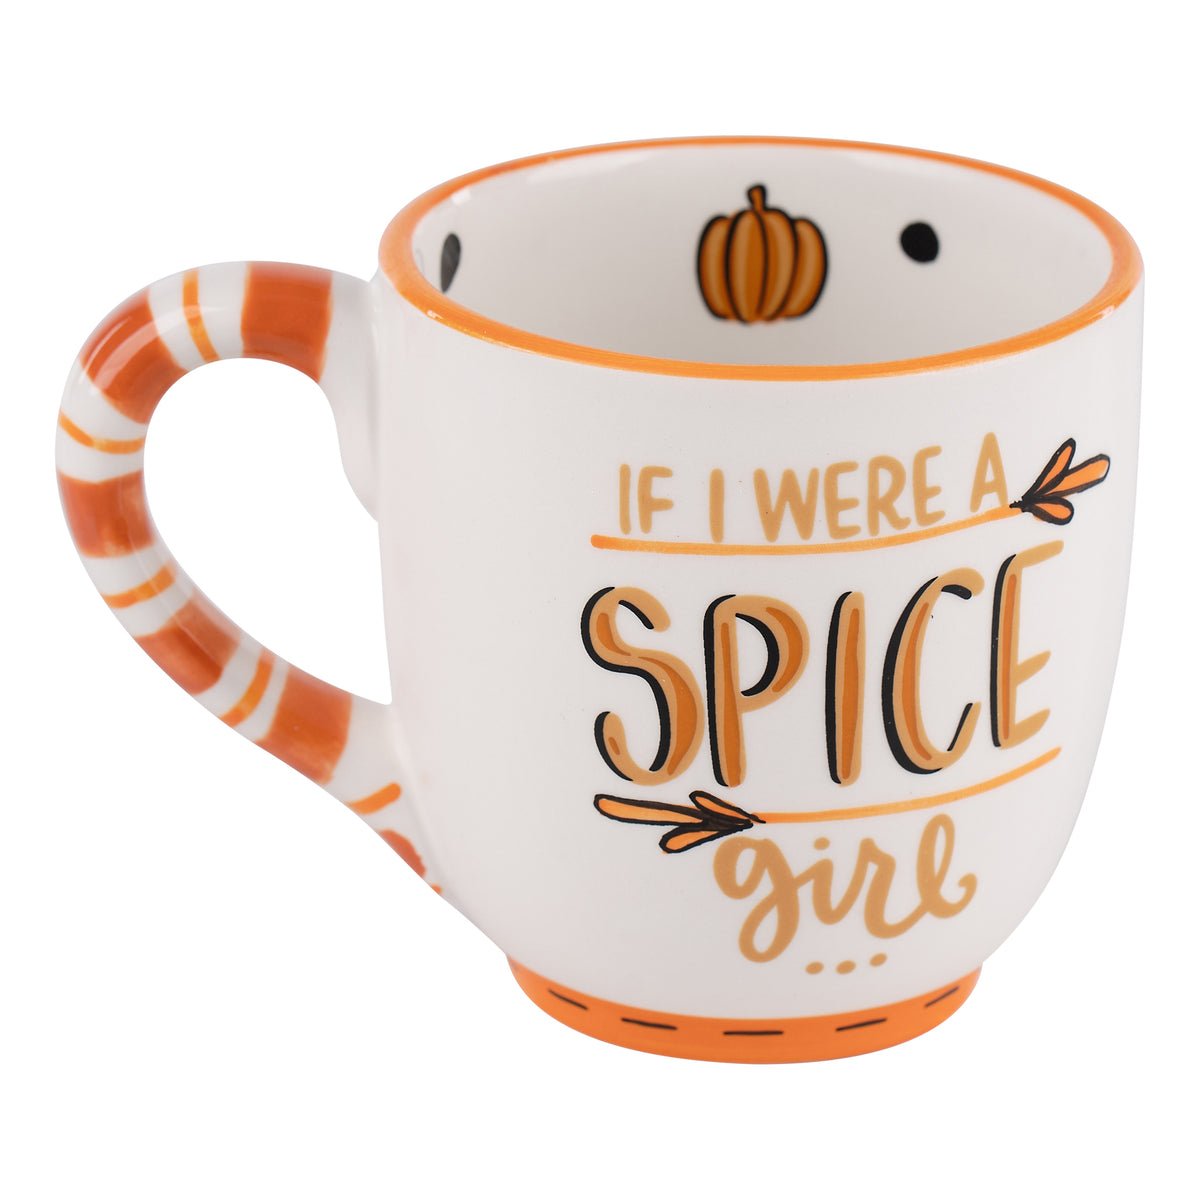 I'd Be Pumpkin Spice Mug